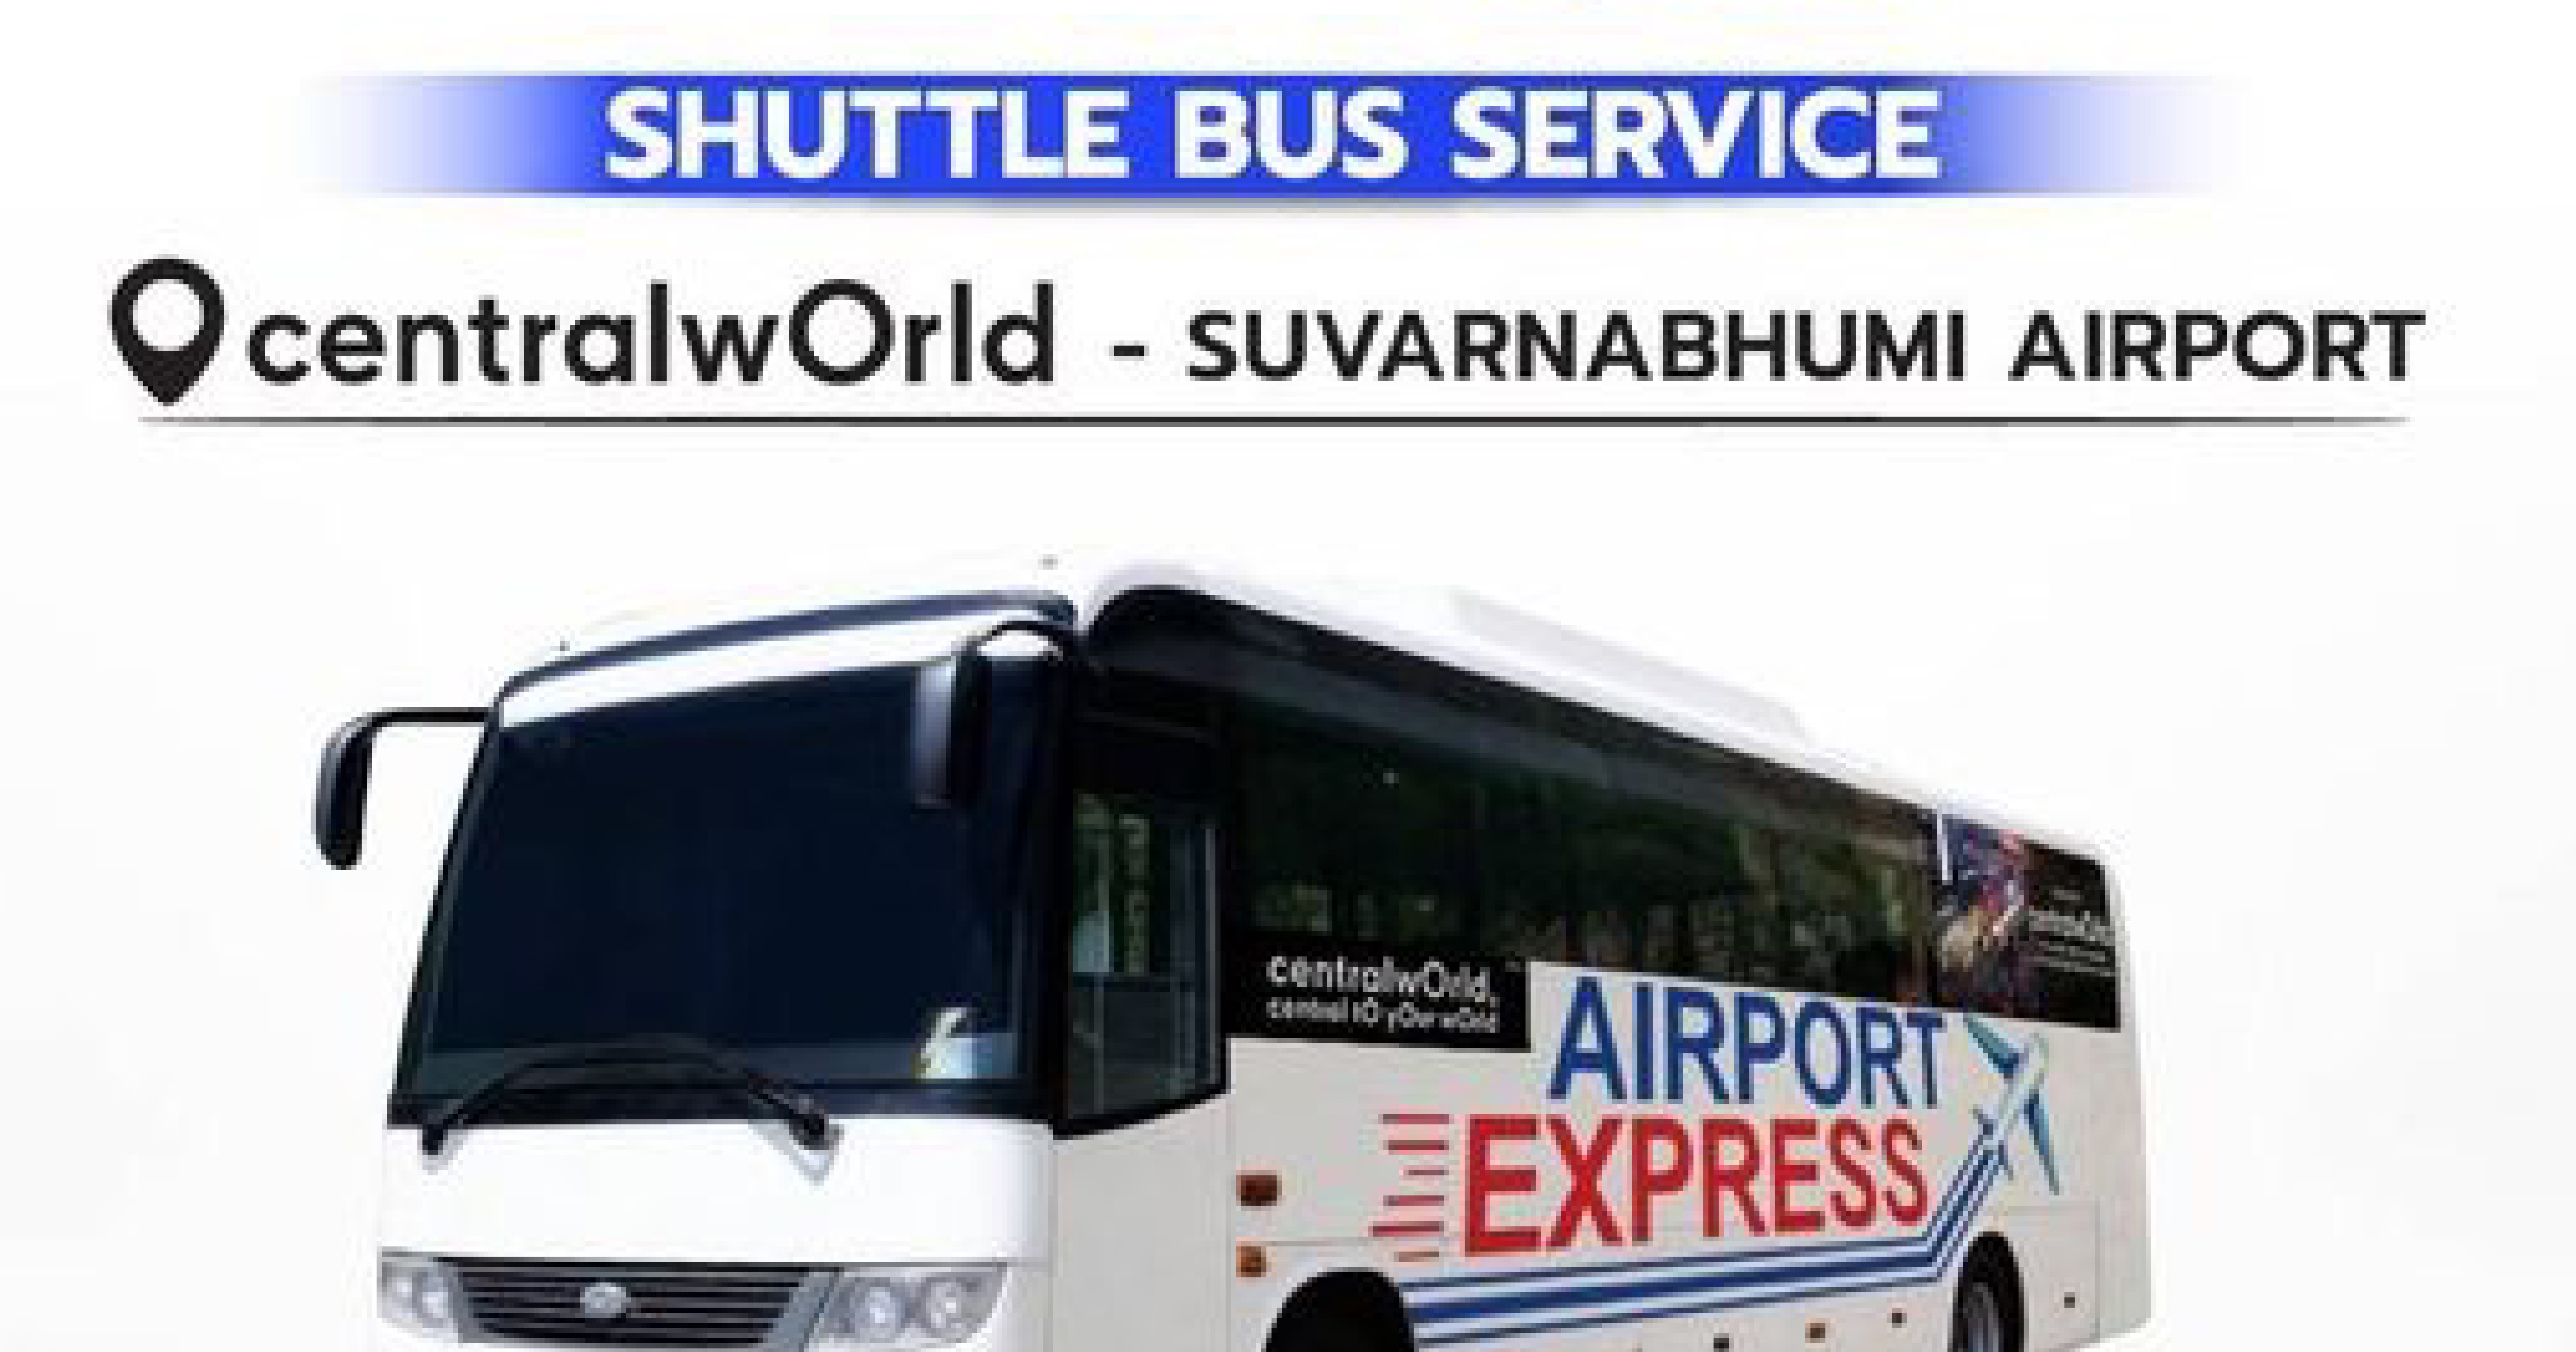 centralwOrld – Suvarnabhumi Airport Shuttle Bus Service